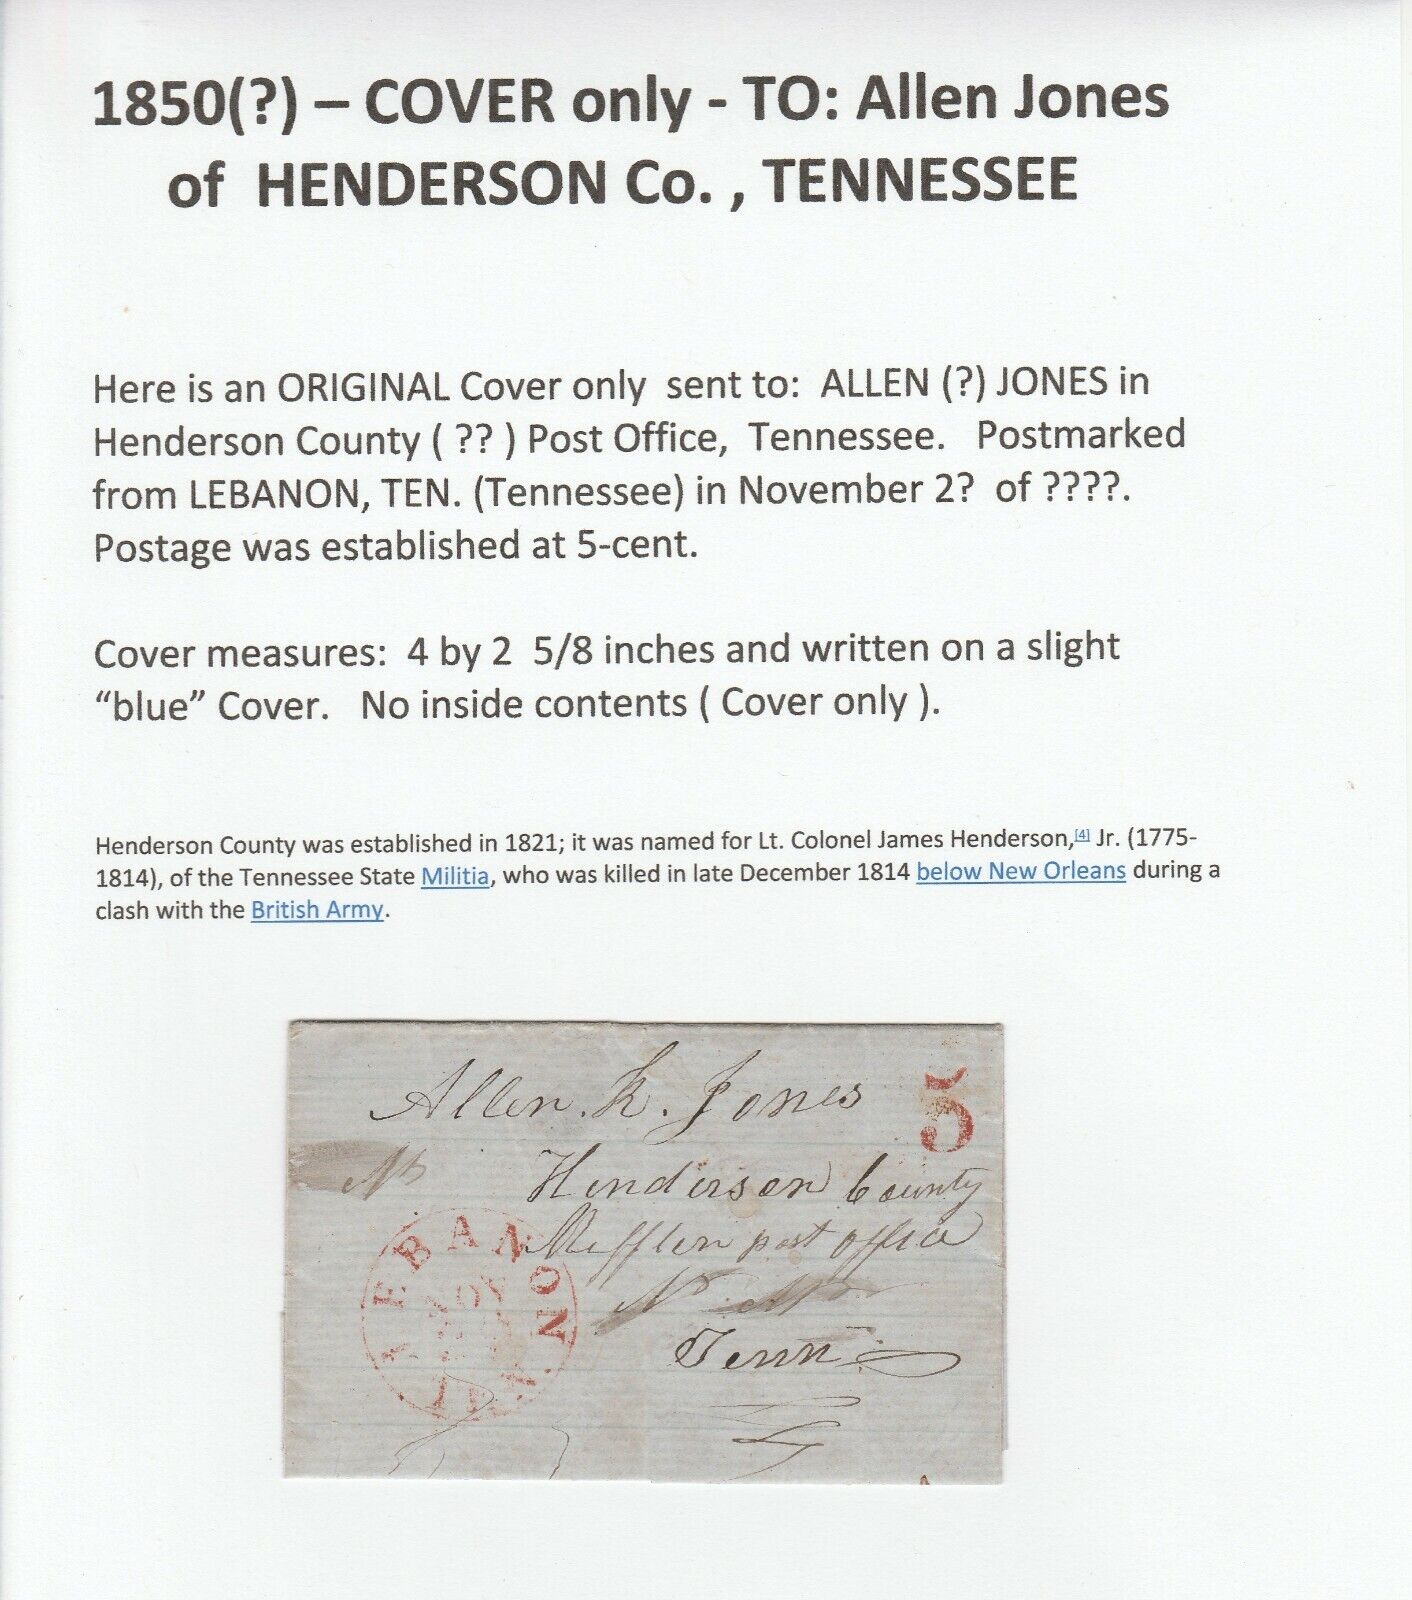 c.1850 - COVER only - From LEBANON, TENN. to Allen Jones HENDERSON Co, TENNESSEE